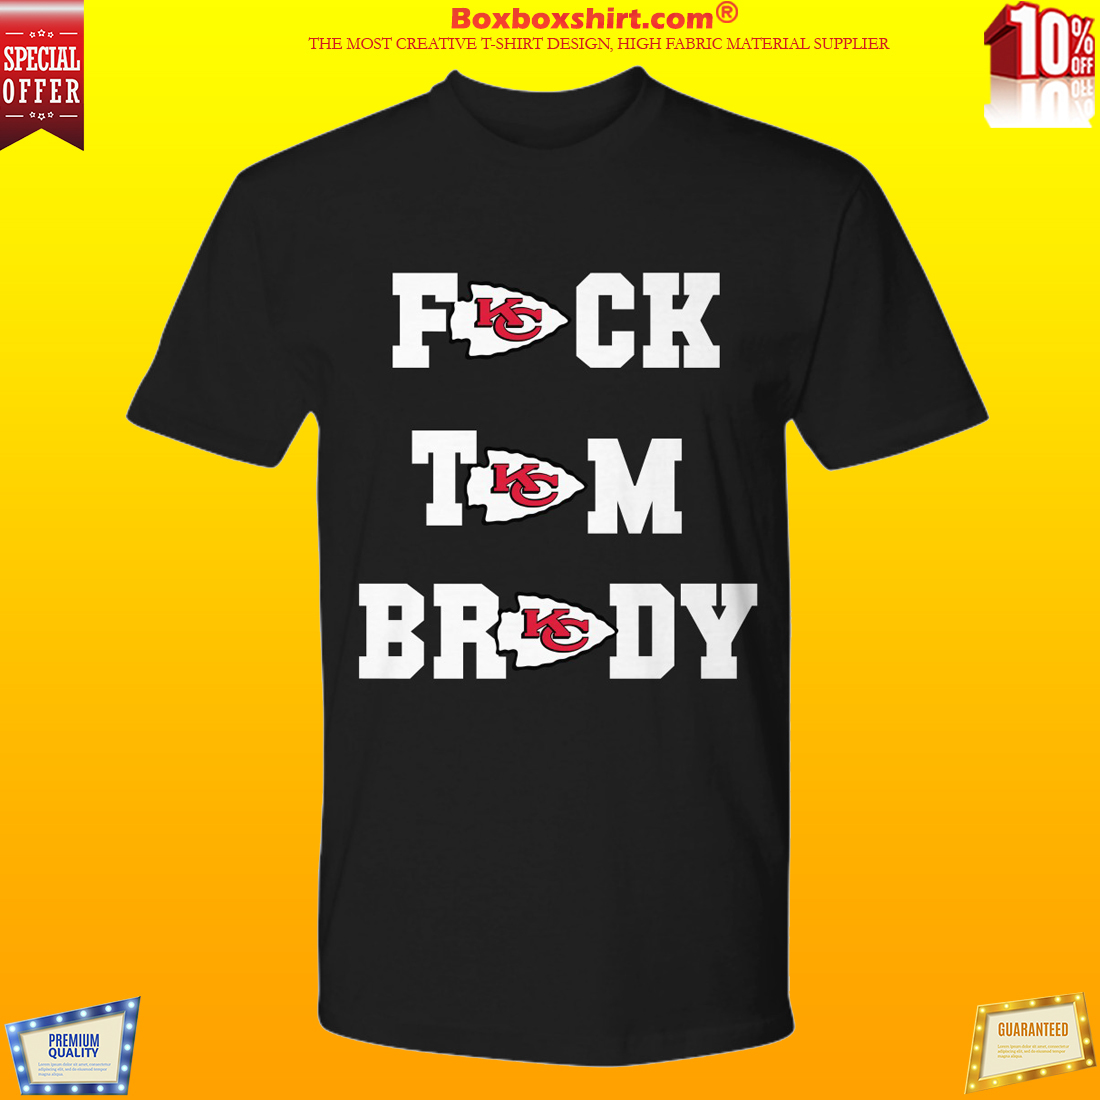 br4dy shirt